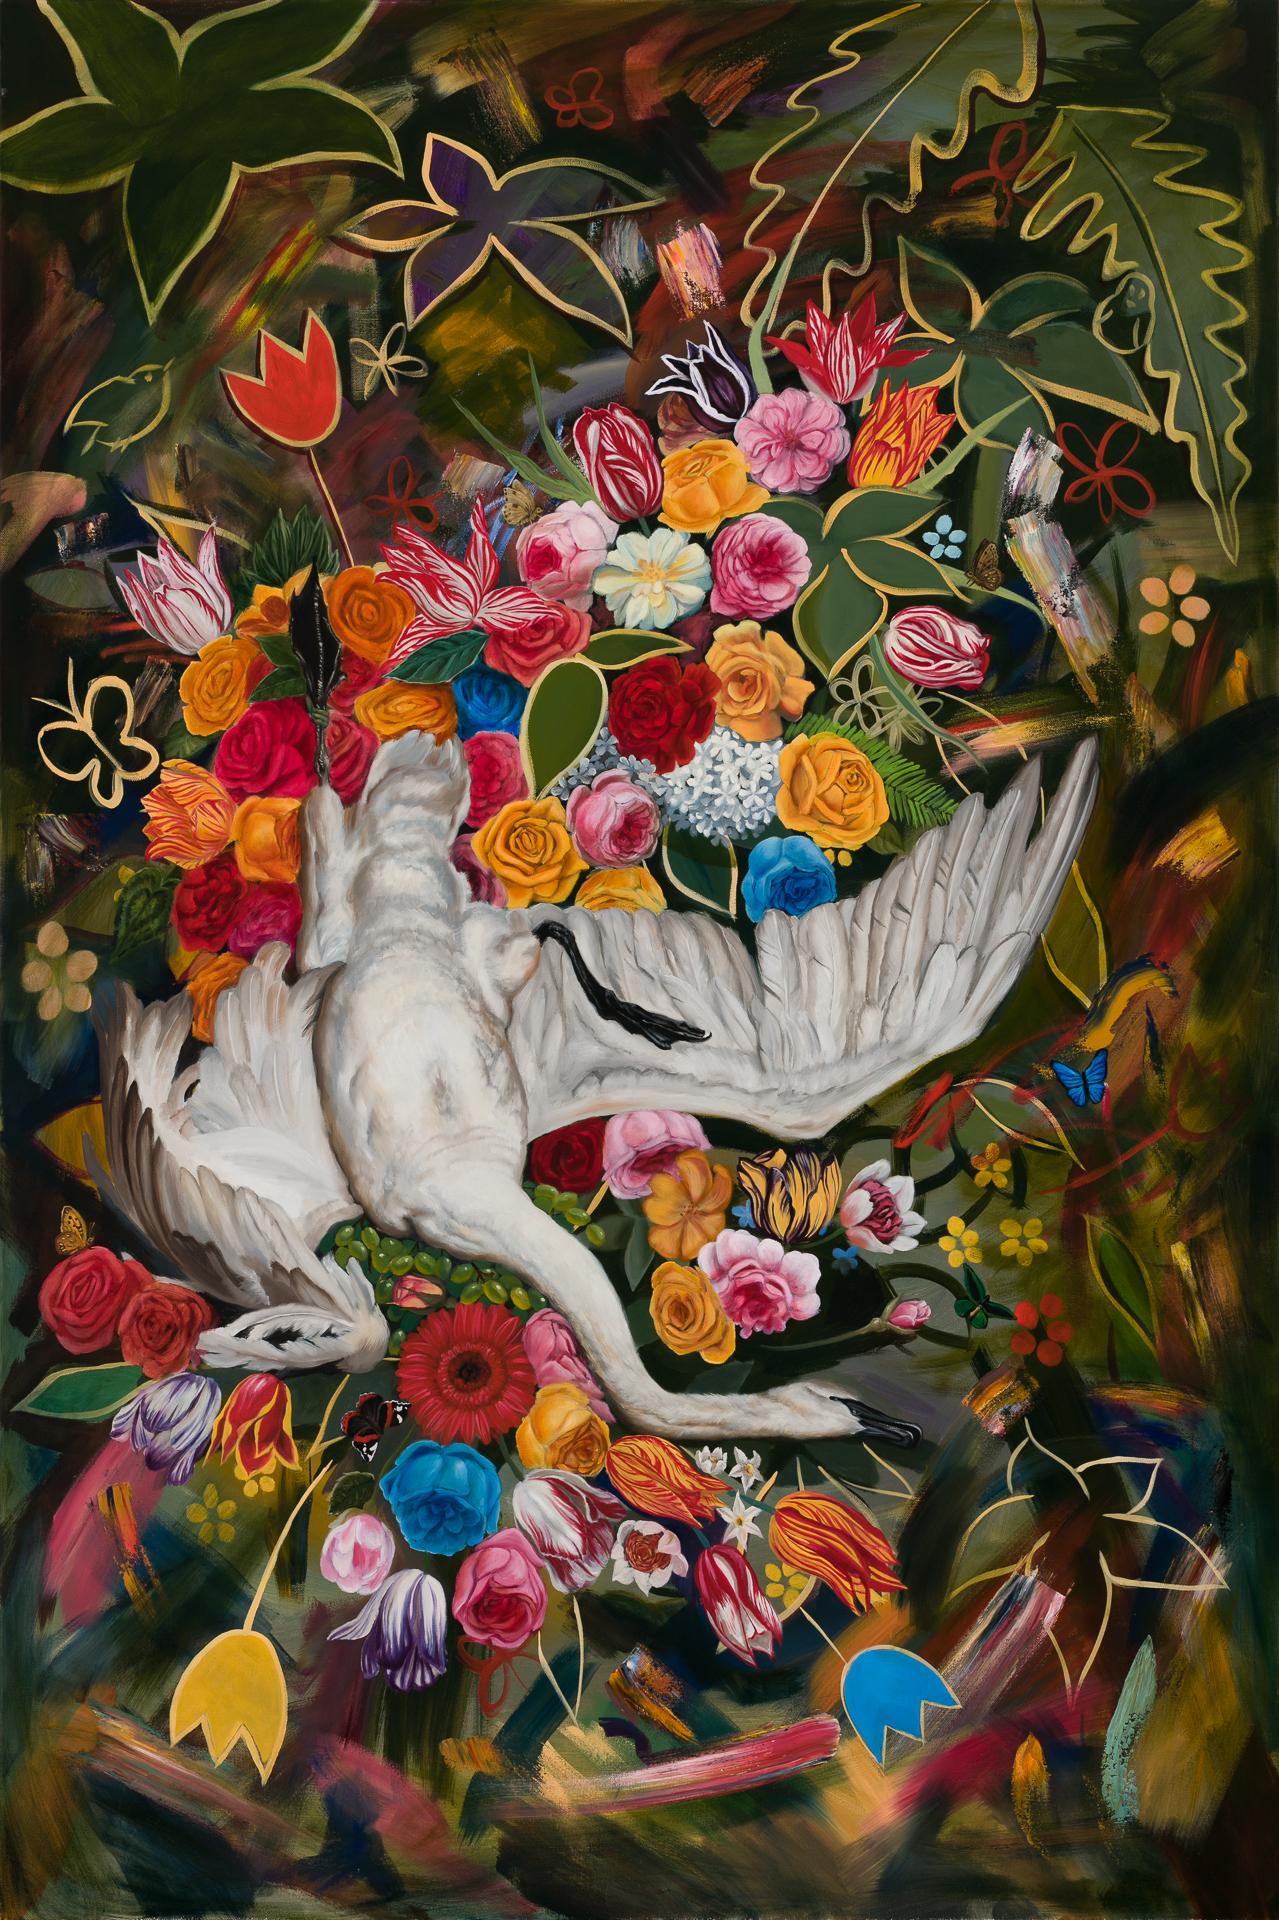 Robin Hextrum Animal Painting - "Fallen Swan" Oil Painting